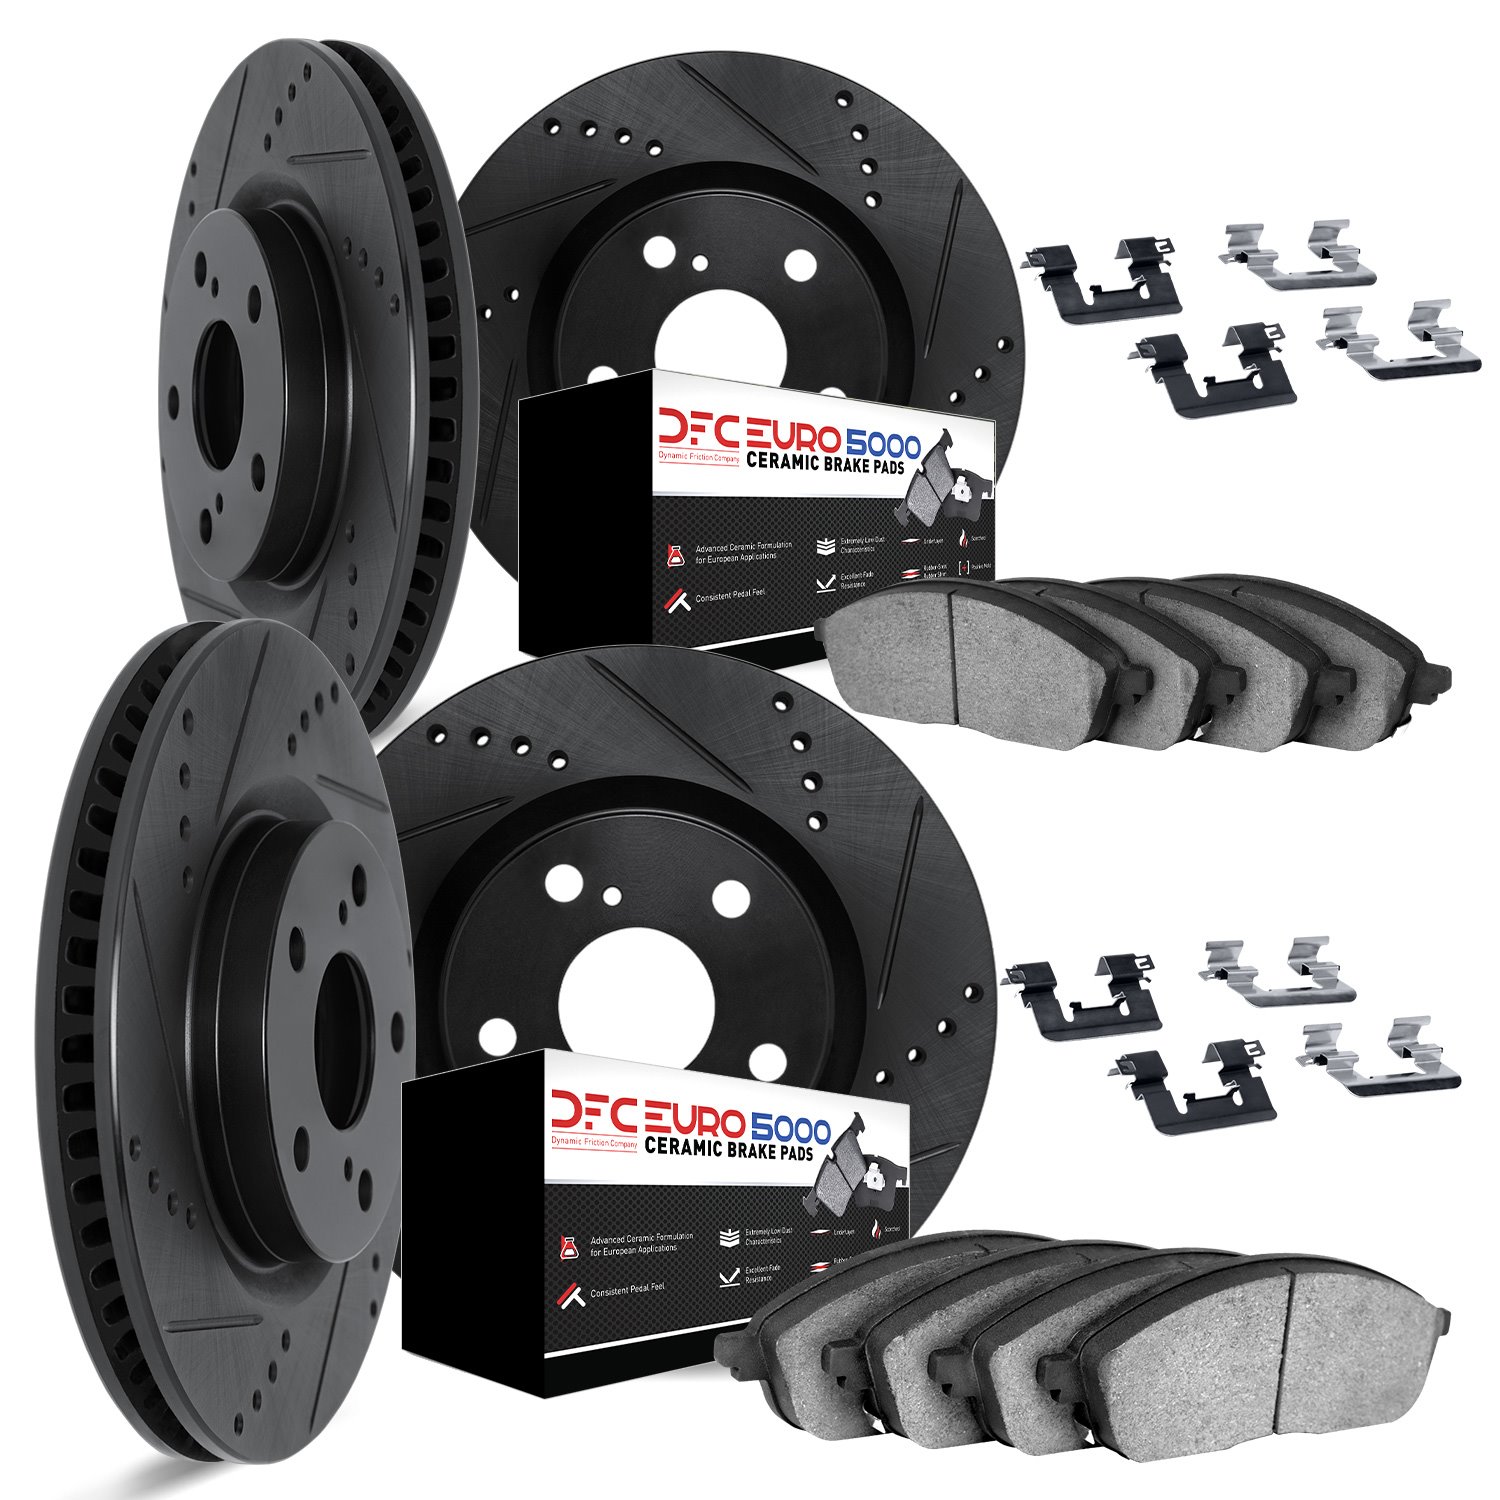 8614-31034 Drilled/Slotted Brake Rotors w/5000 Euro Ceramic Brake Pads Kit & Hardware [Black], Fits Select BMW, Position: Front